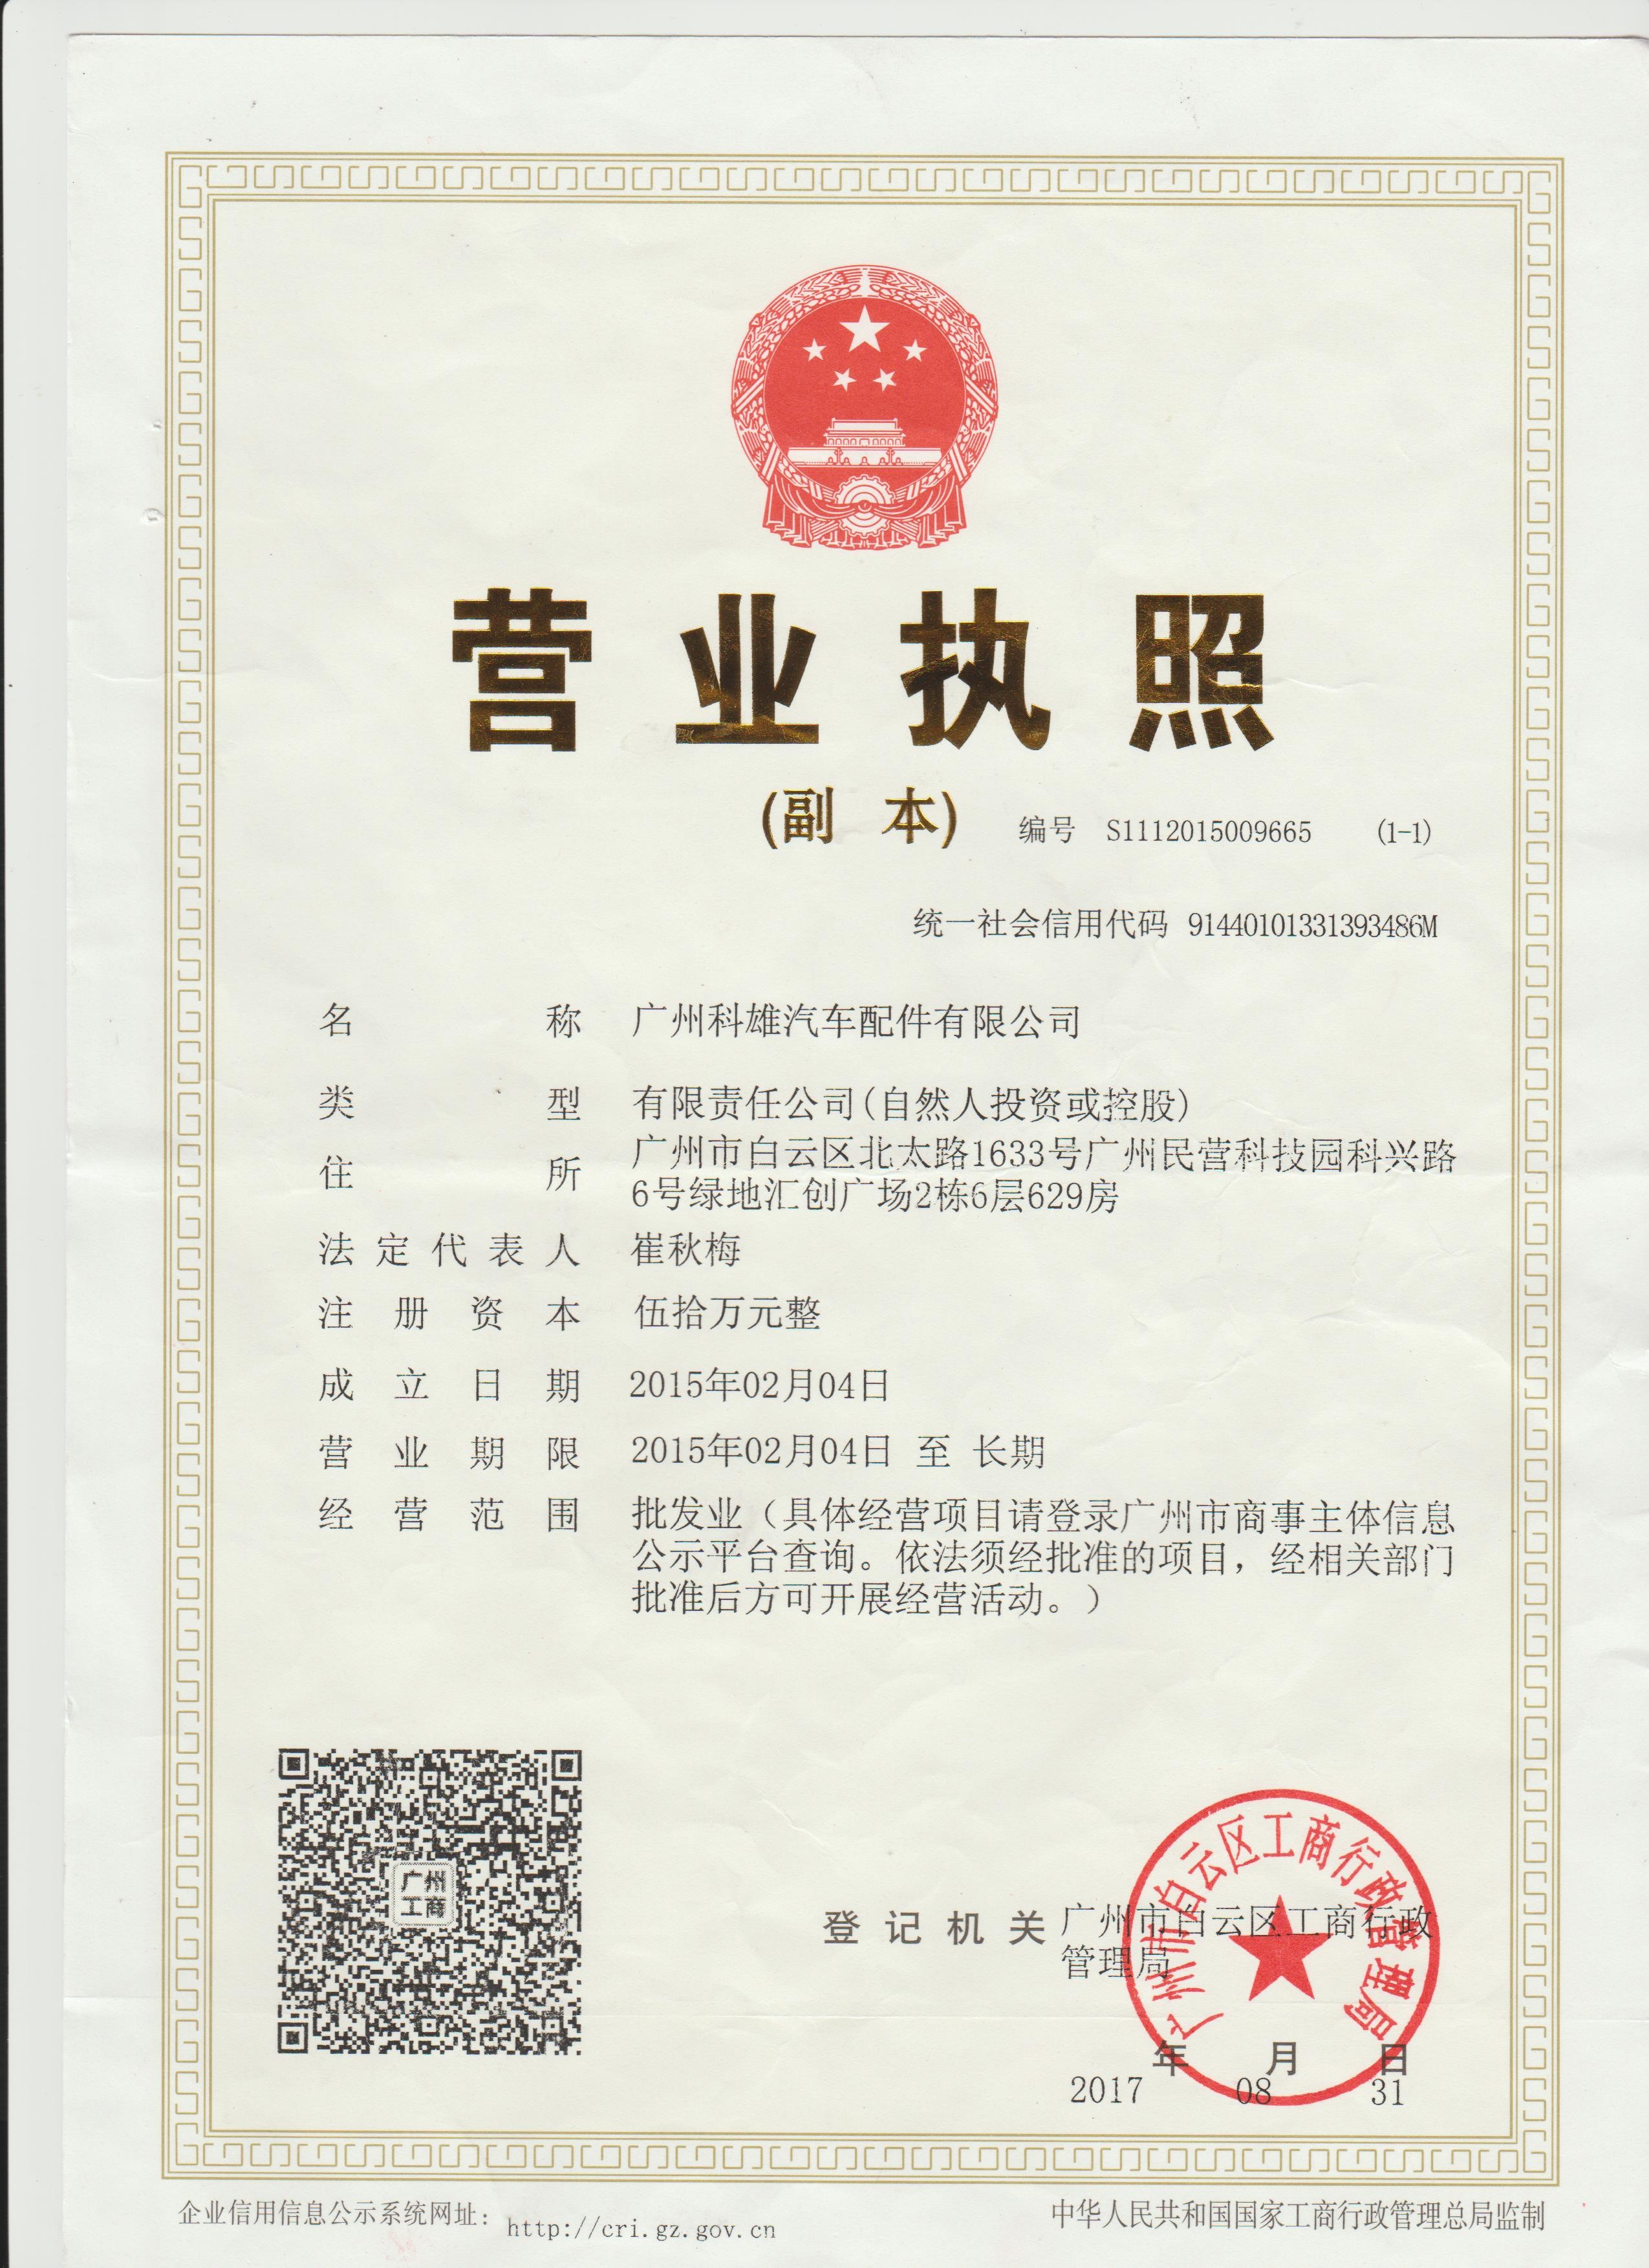 Guangzhou Tech master auto parts co.ltd Certifications